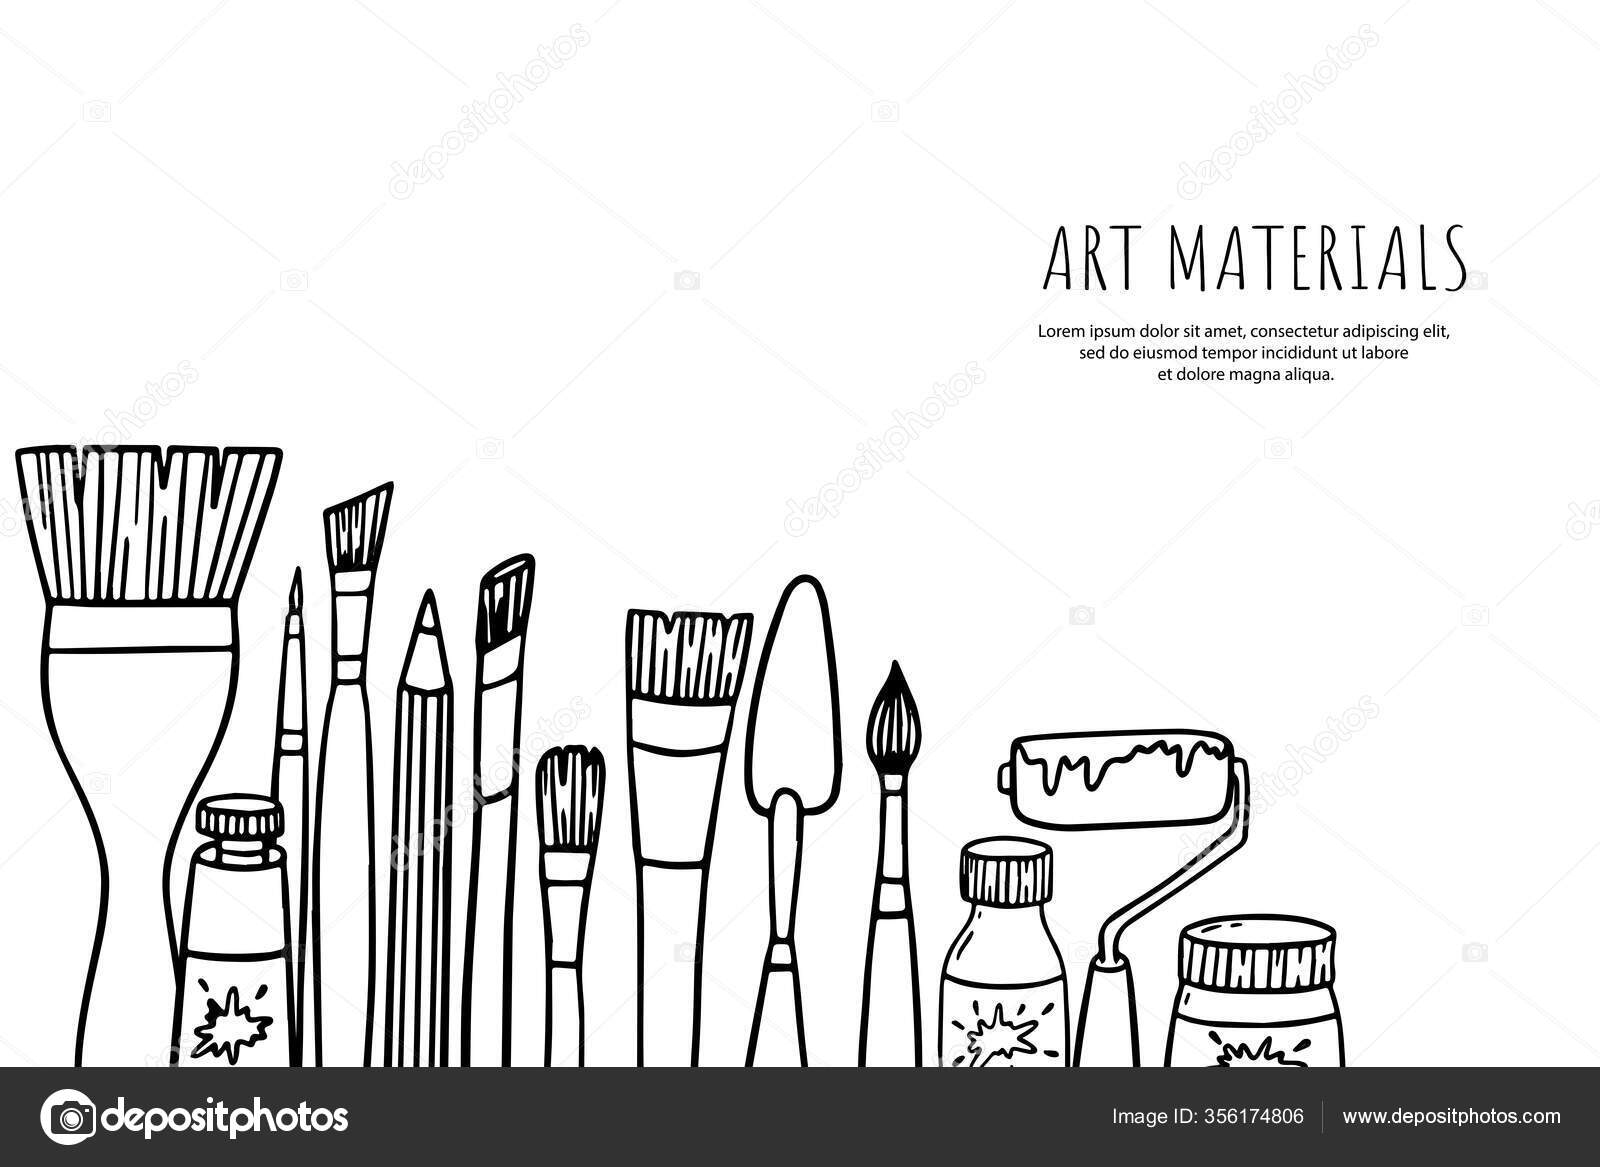 https://st3.depositphotos.com/7370560/35617/v/1600/depositphotos_356174806-stock-illustration-banner-art-materials-hand-drawn.jpg